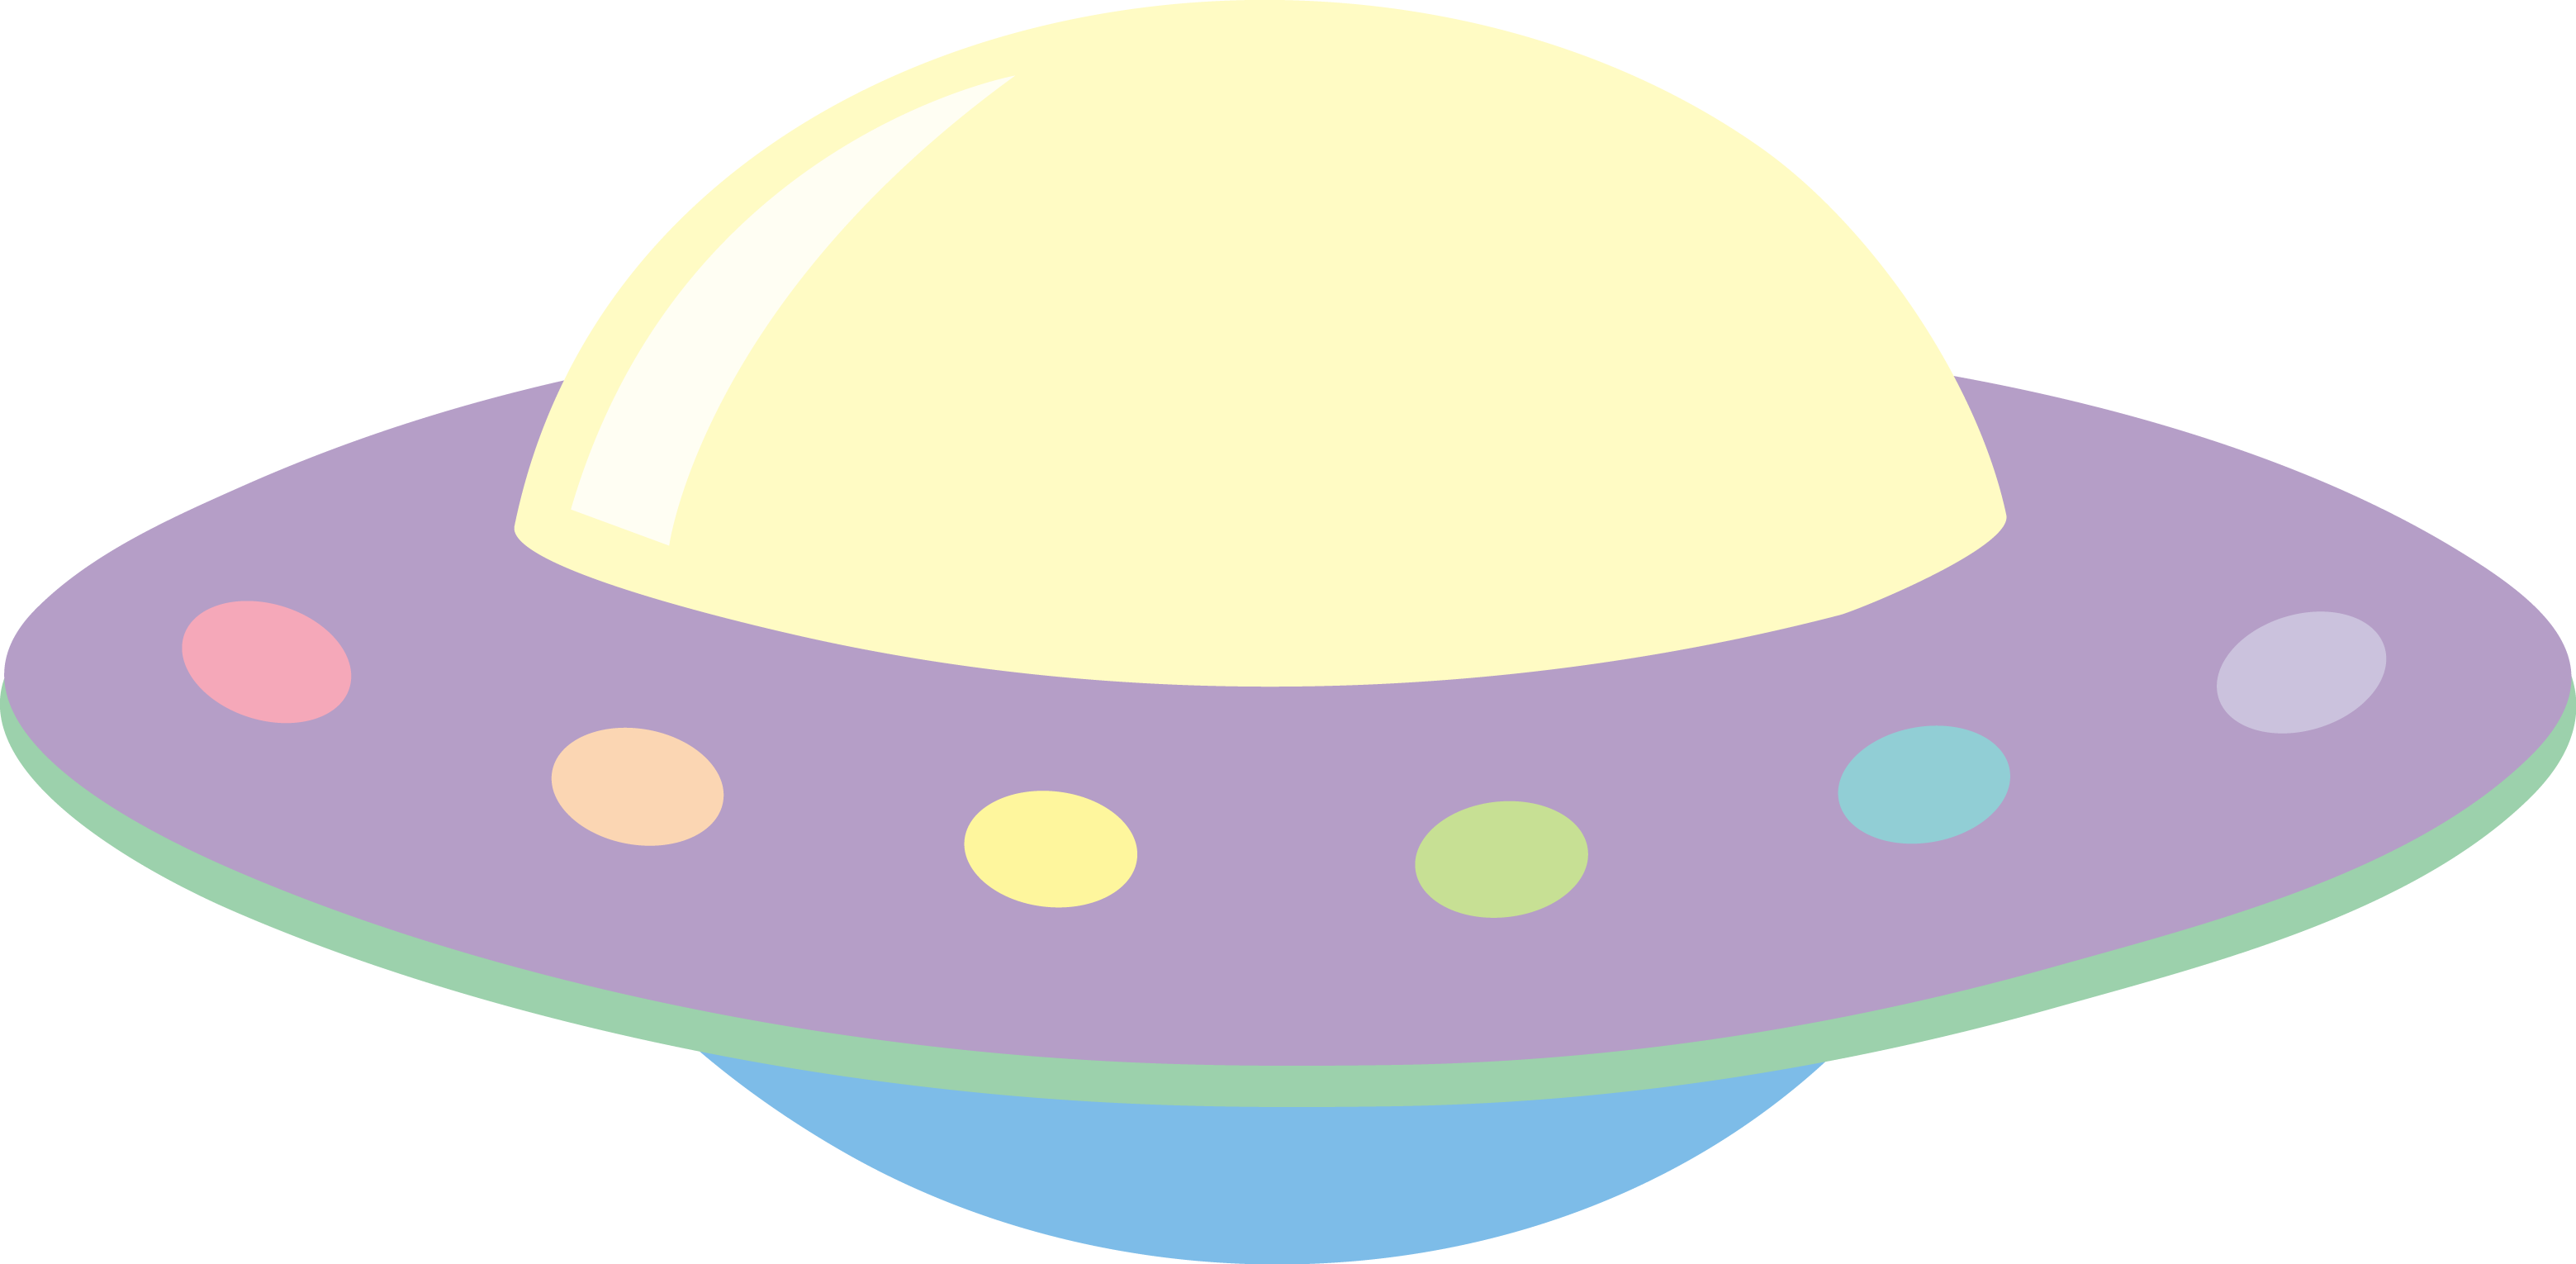 Pastel Colored Alien UFO - Free Clip Art